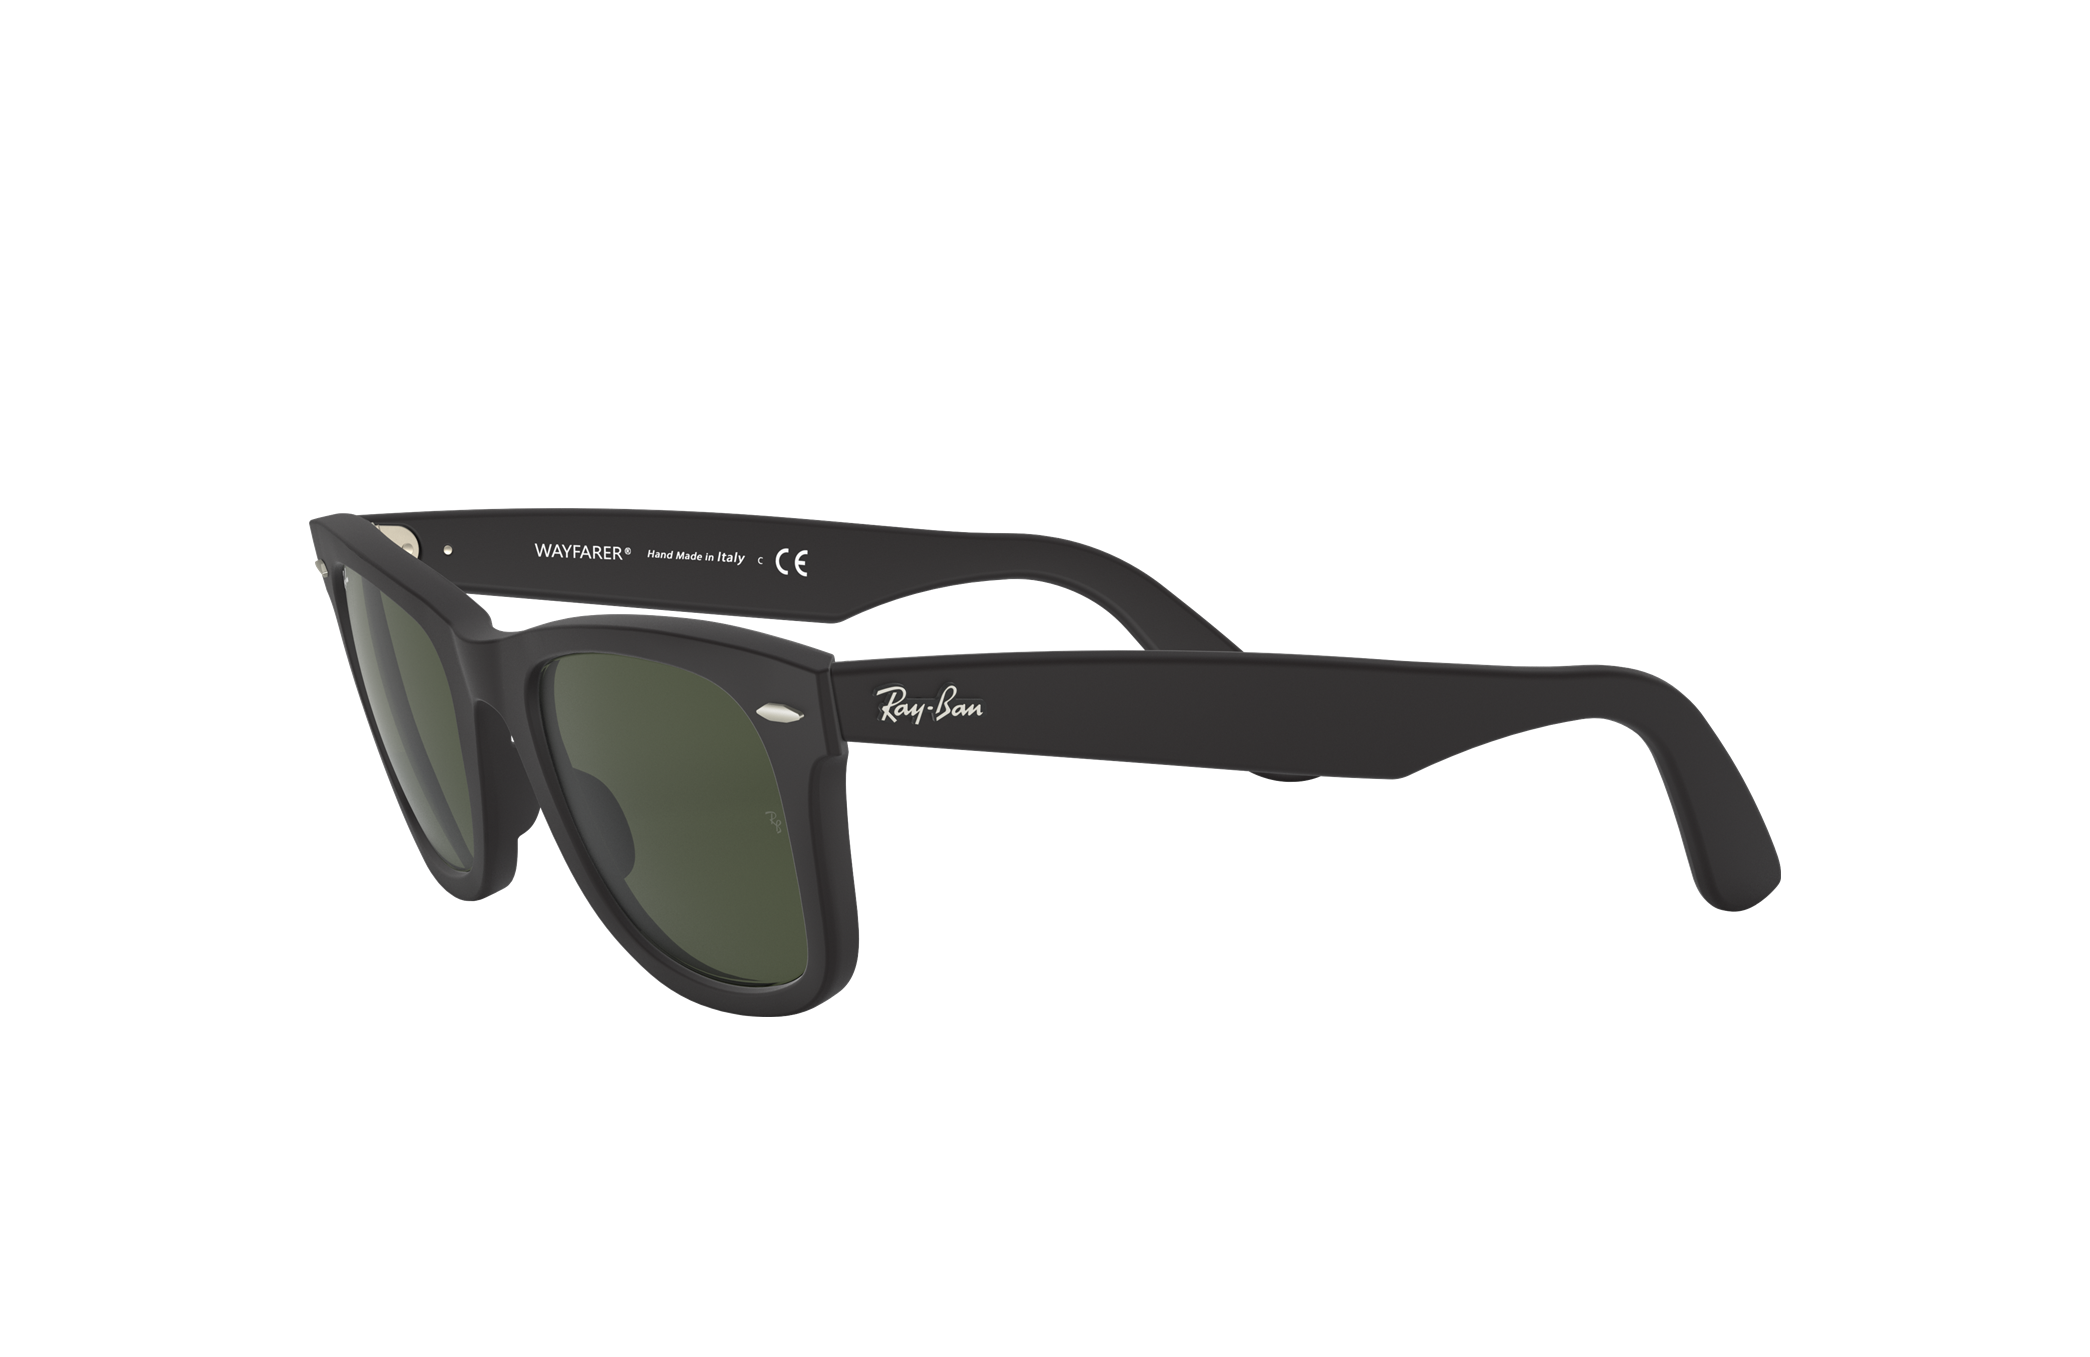 ORIGINAL WAYFARER CLASSIC Sunglasses in Tortoise and Brown - RB2140 |  Ray-Ban® US